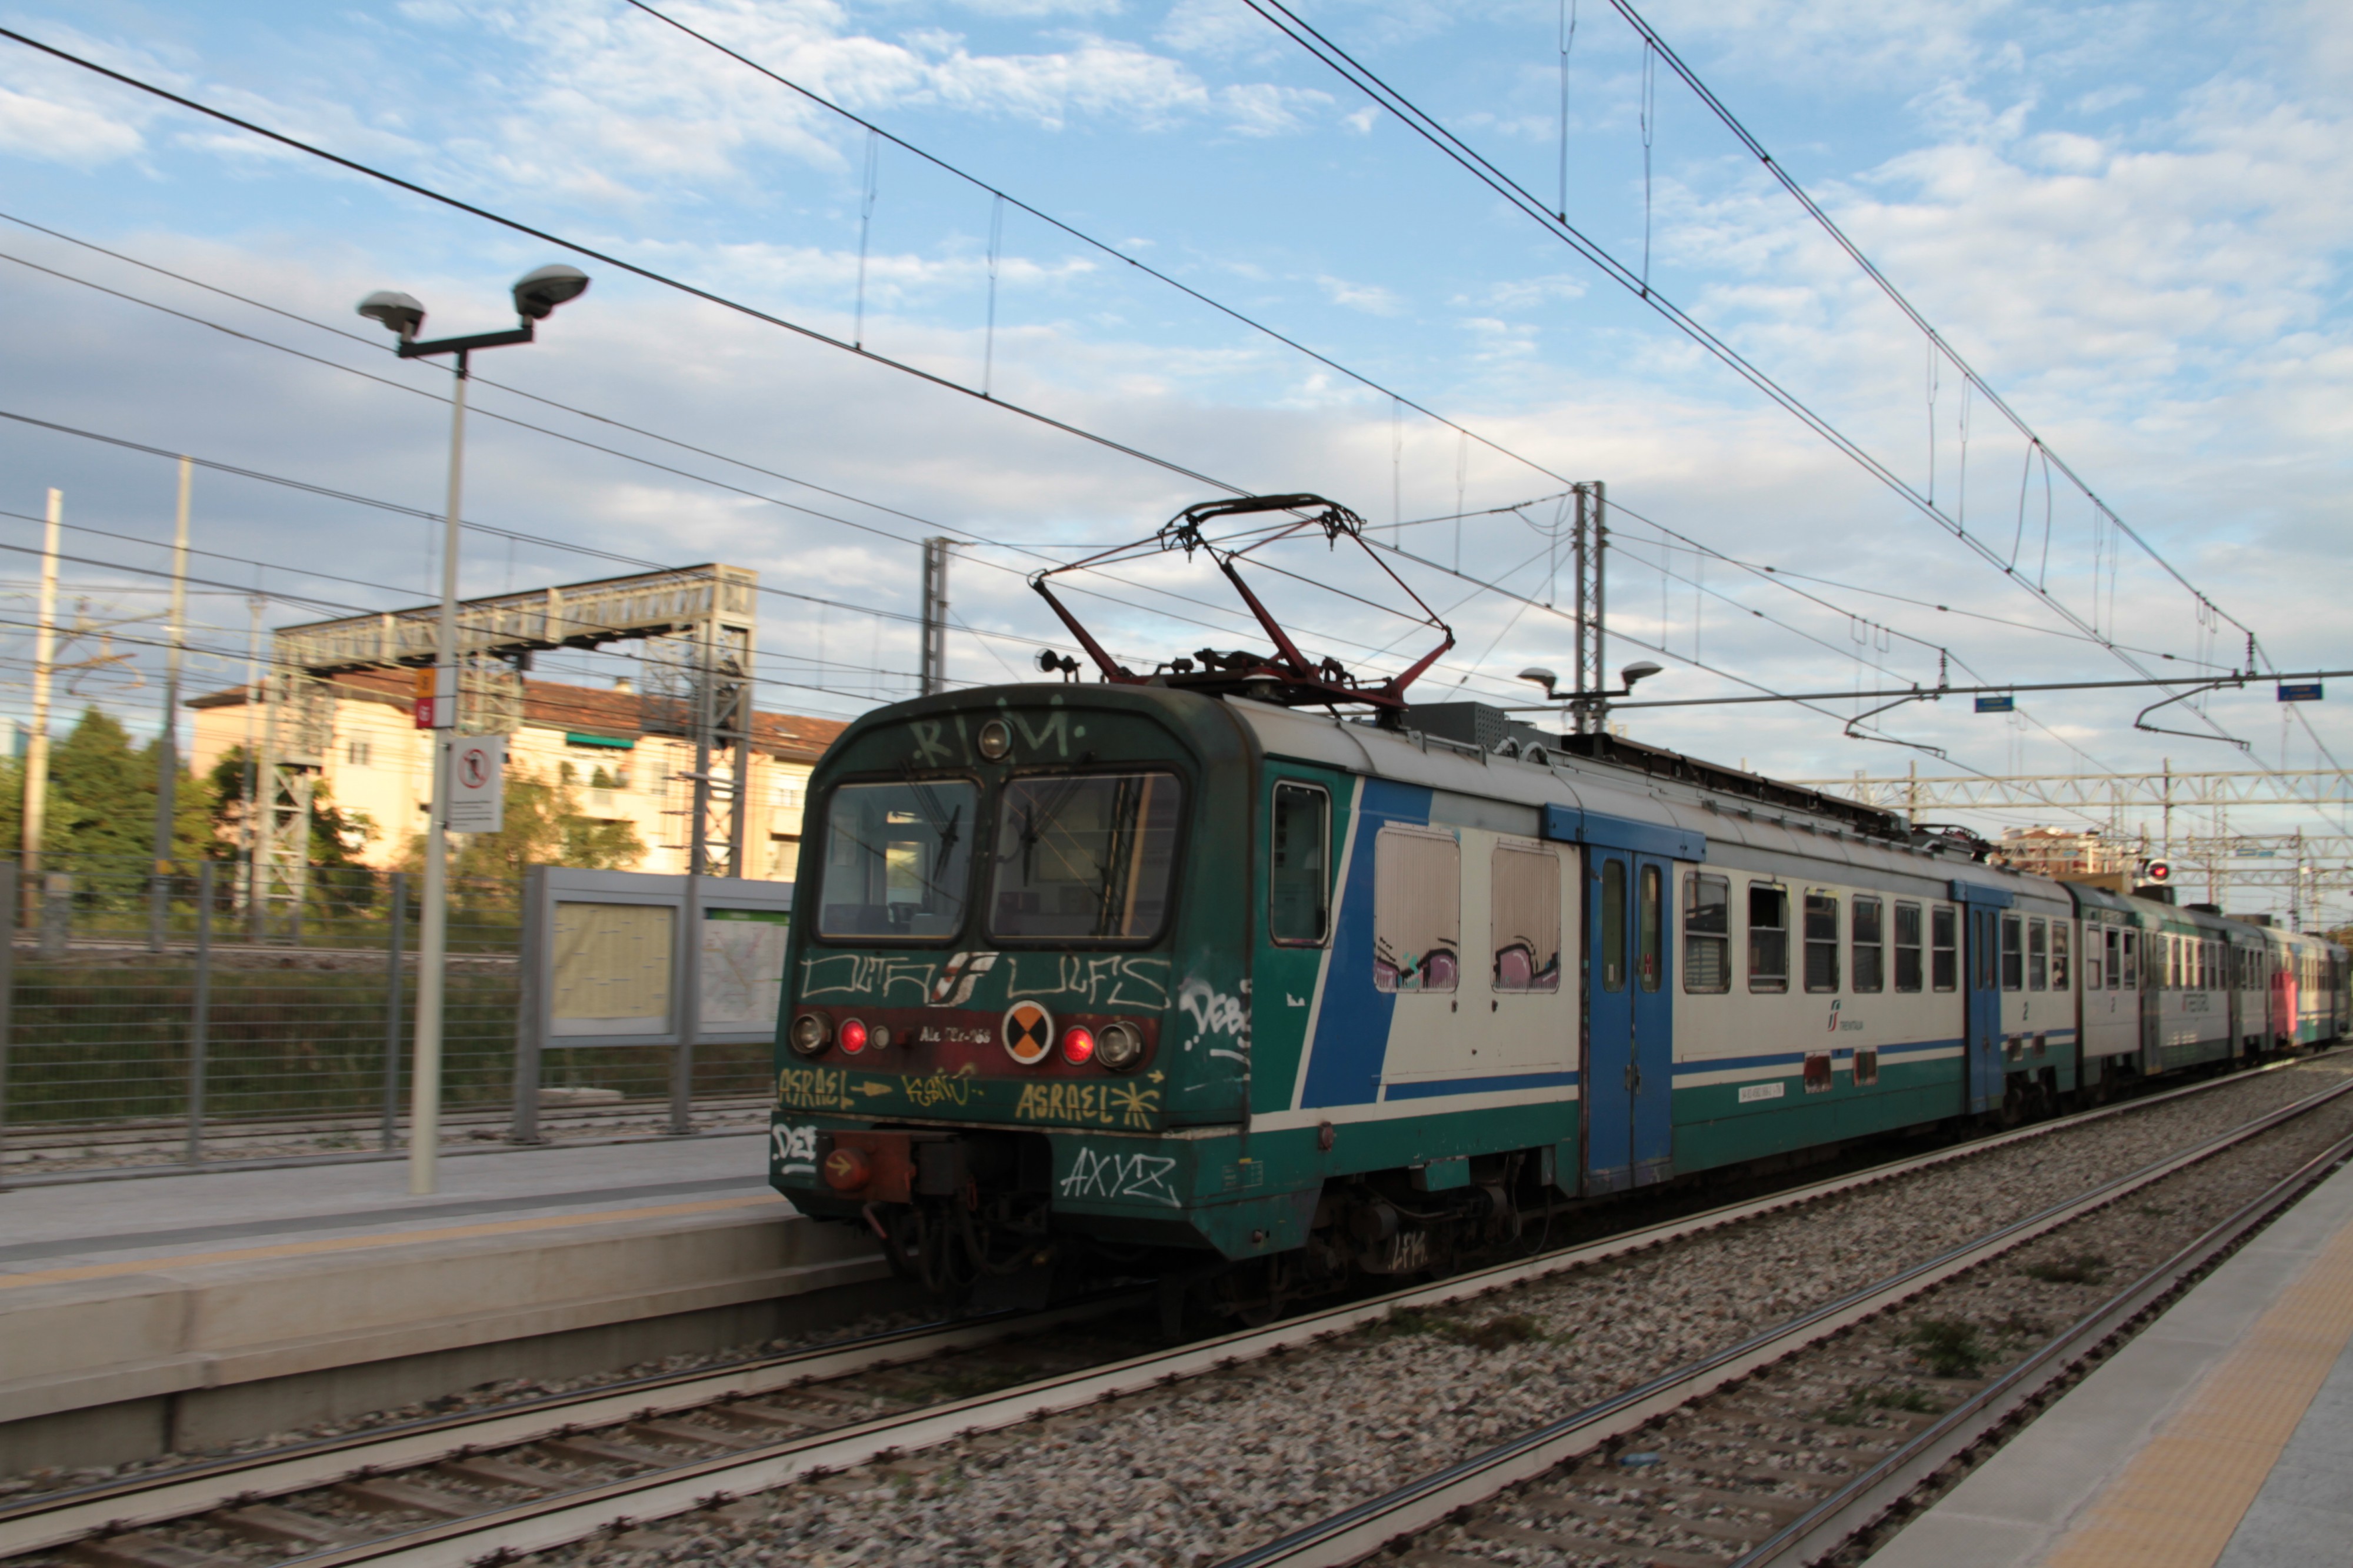 2016-06-21 Wikimania, Train station Milano Forlanini - Trenord (freddy2001) (16)